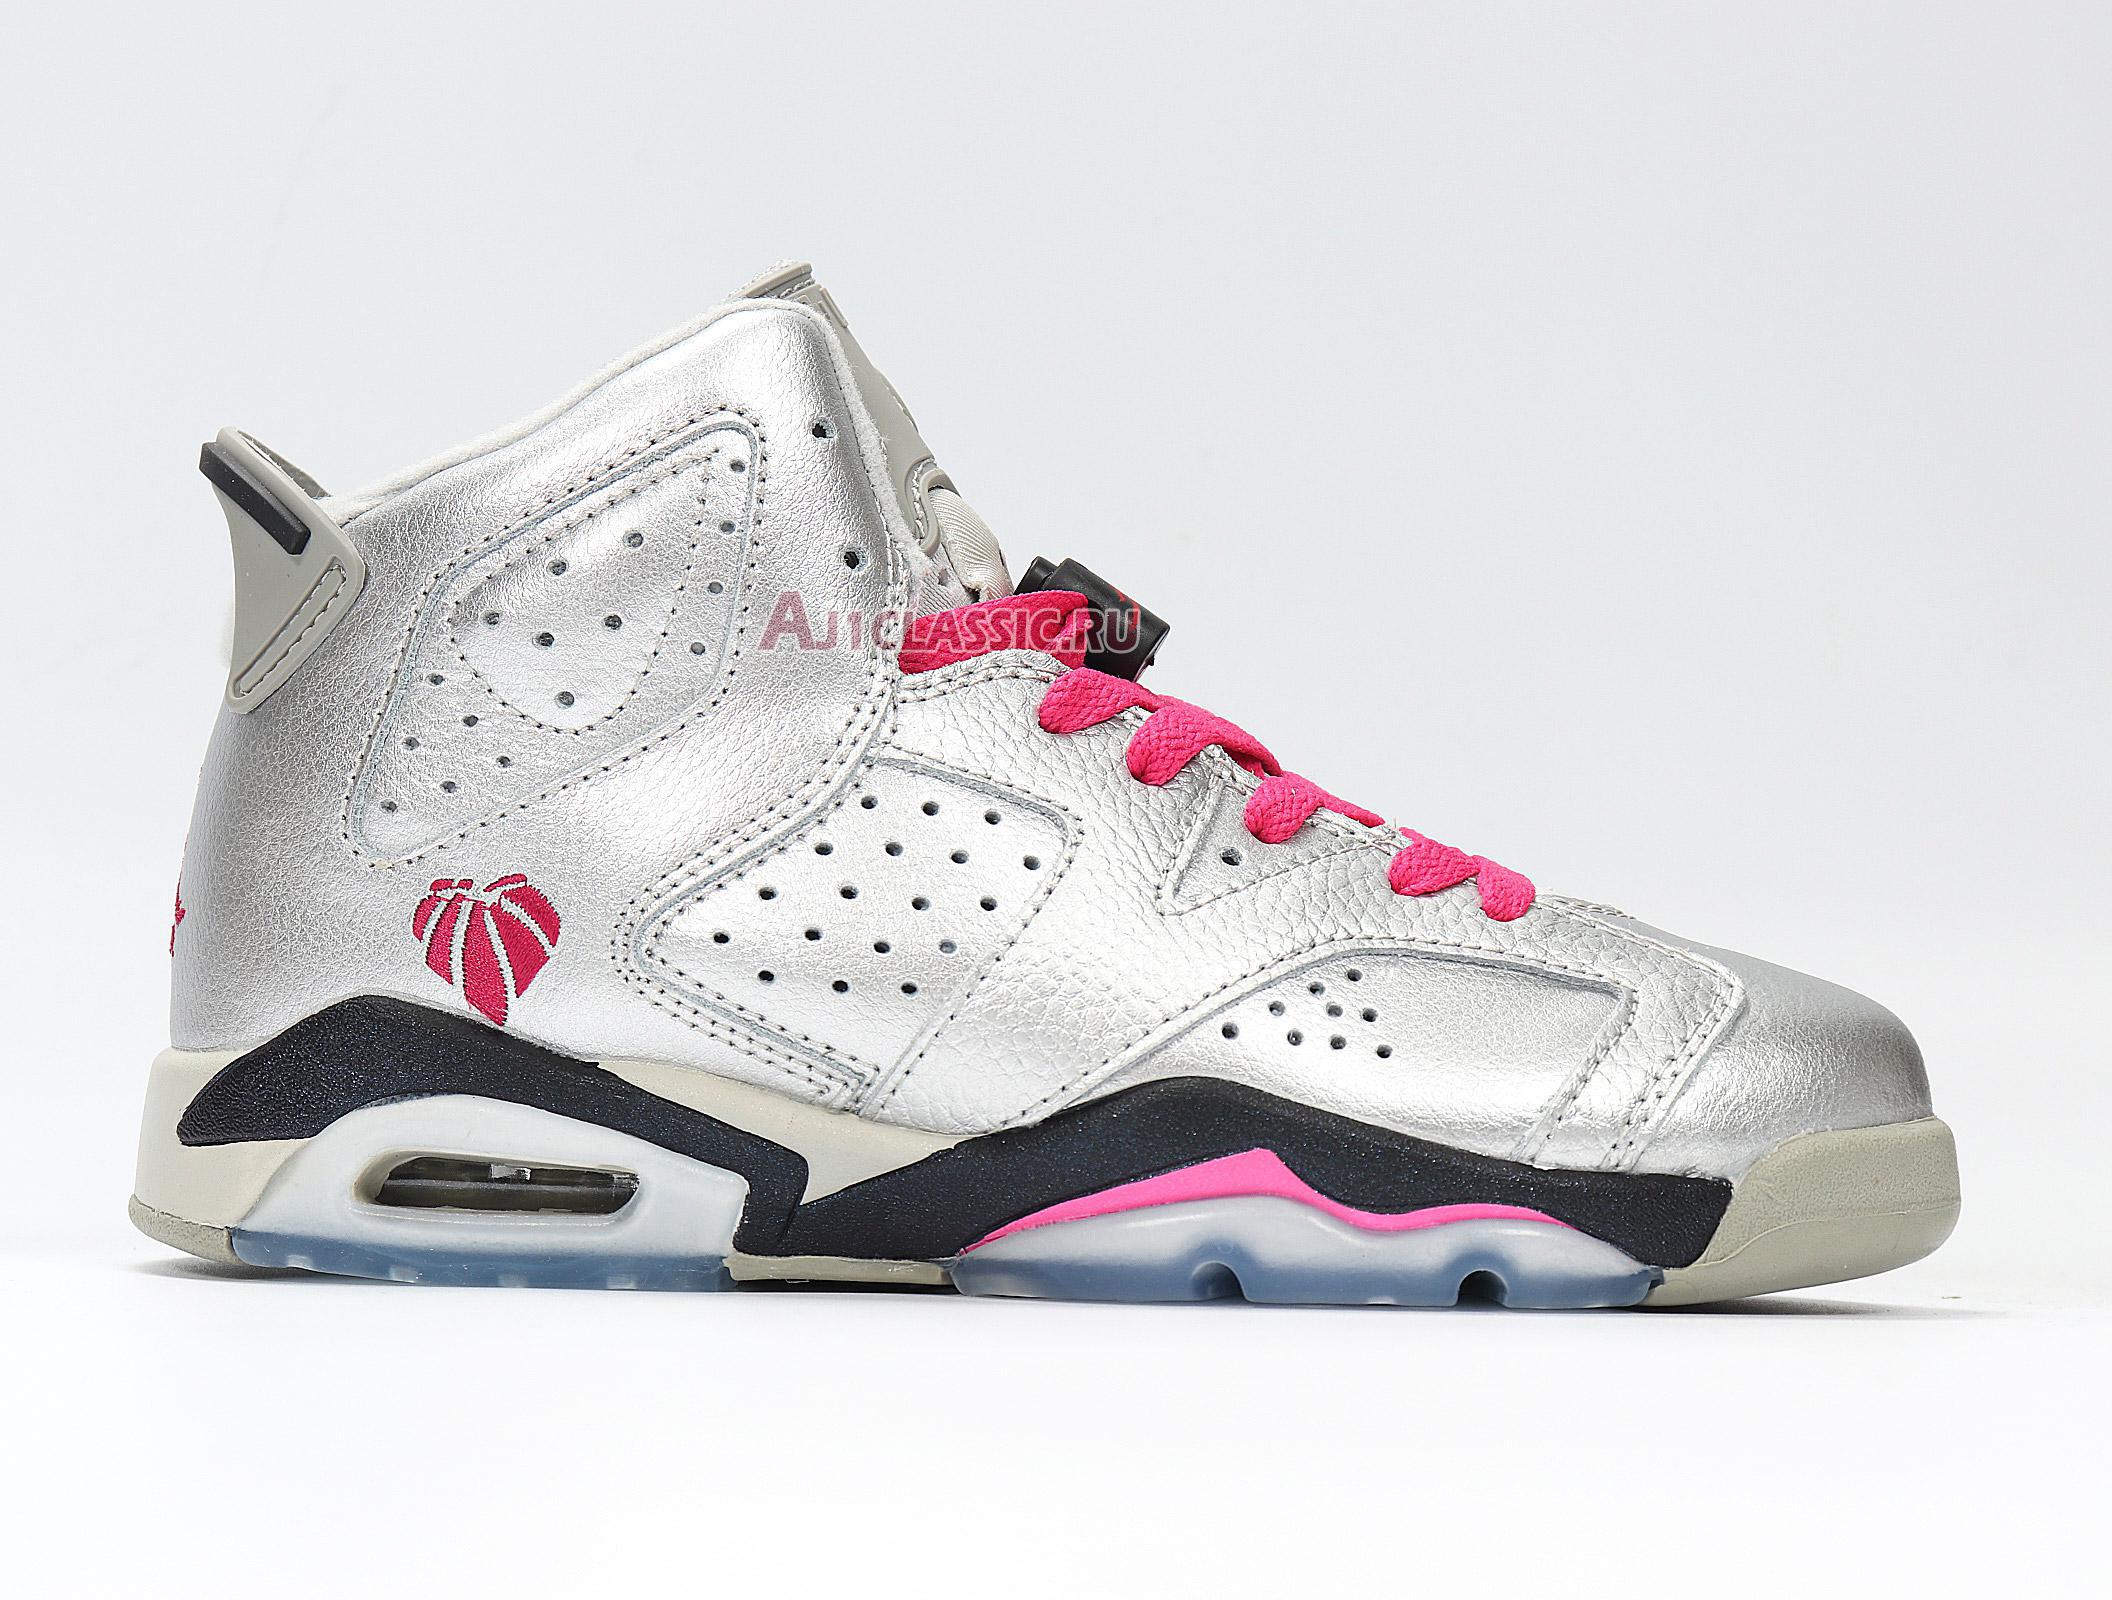 Air Jordan 6 Retro GG Valentines Day 543390-009 Metallic Silver/Vivid Pink-Black Sneakers